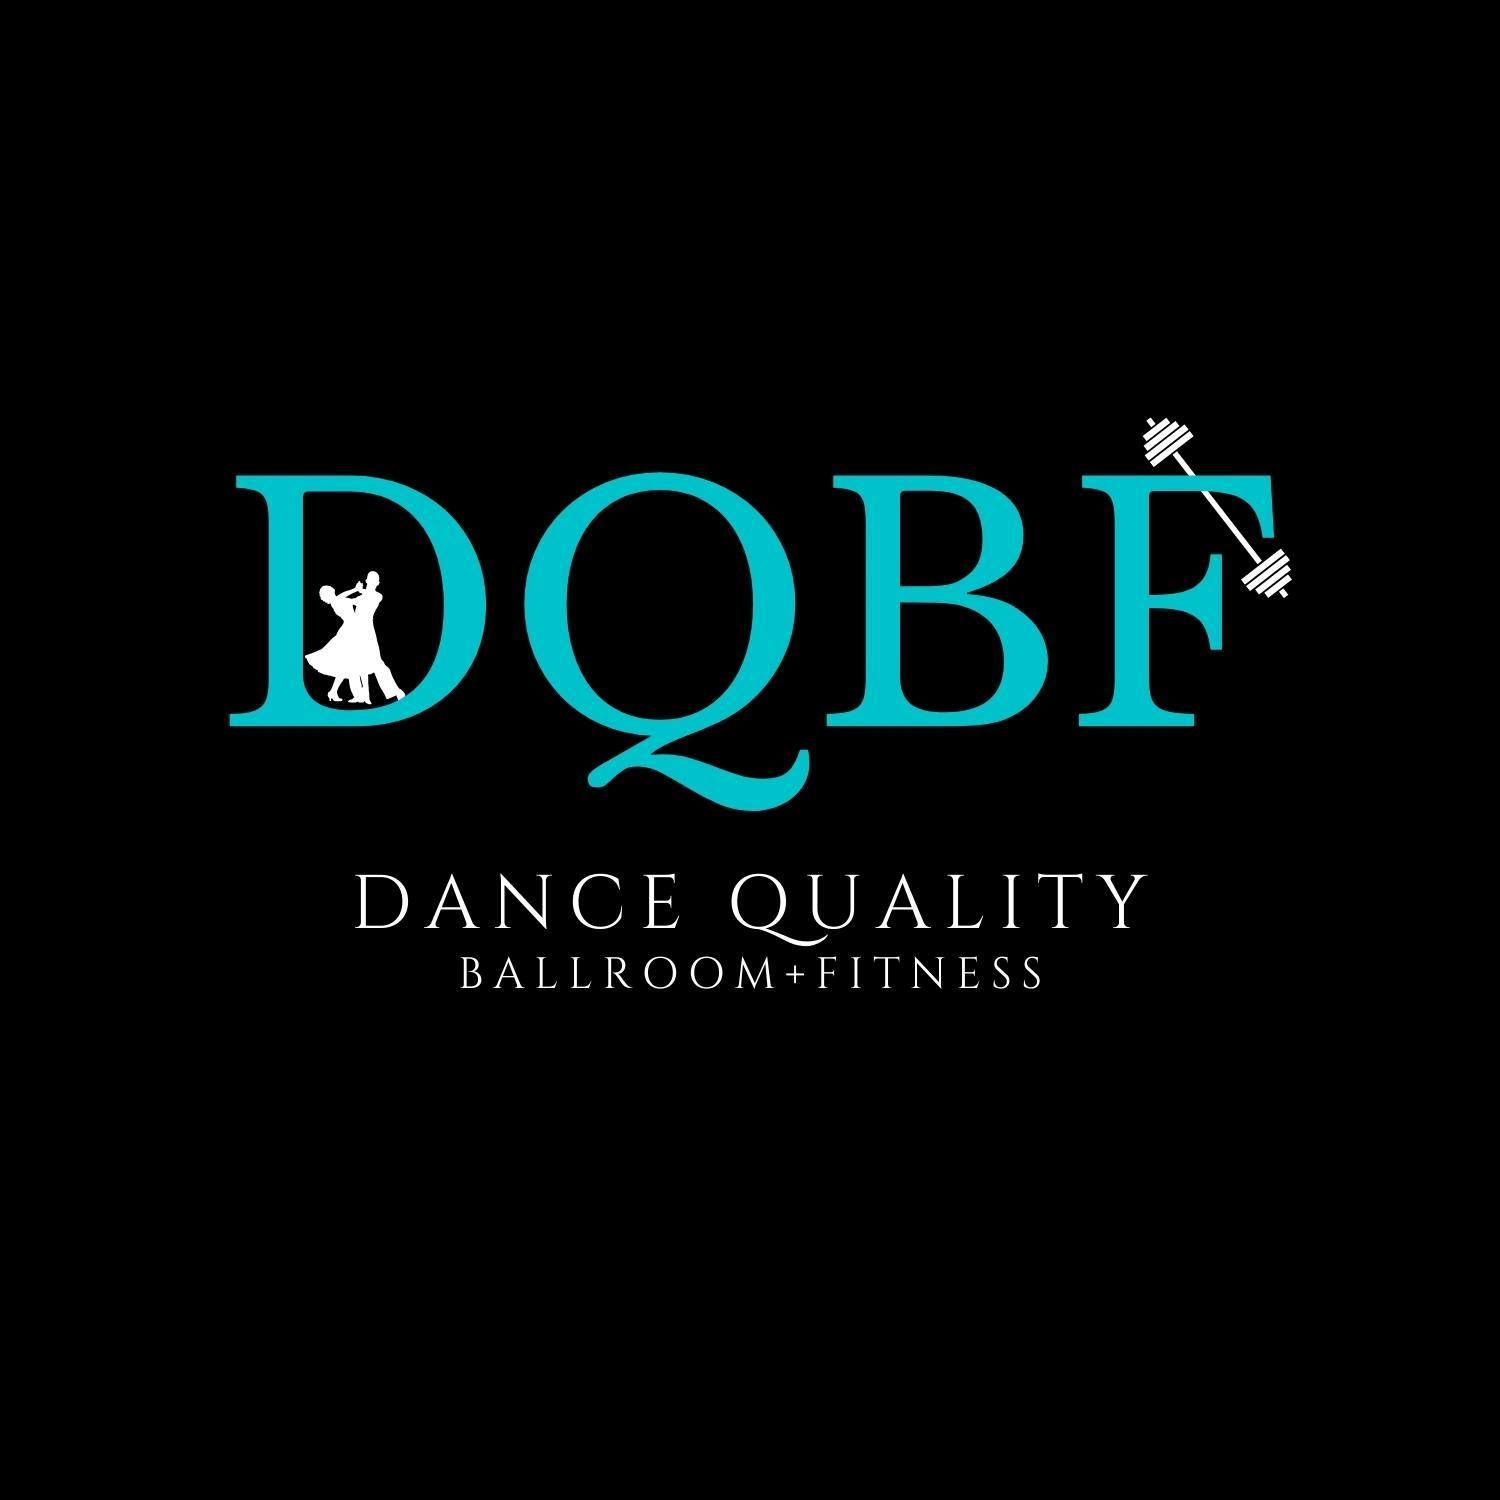 Reach Your Dance, Health, and Wellness Goals - DQBF